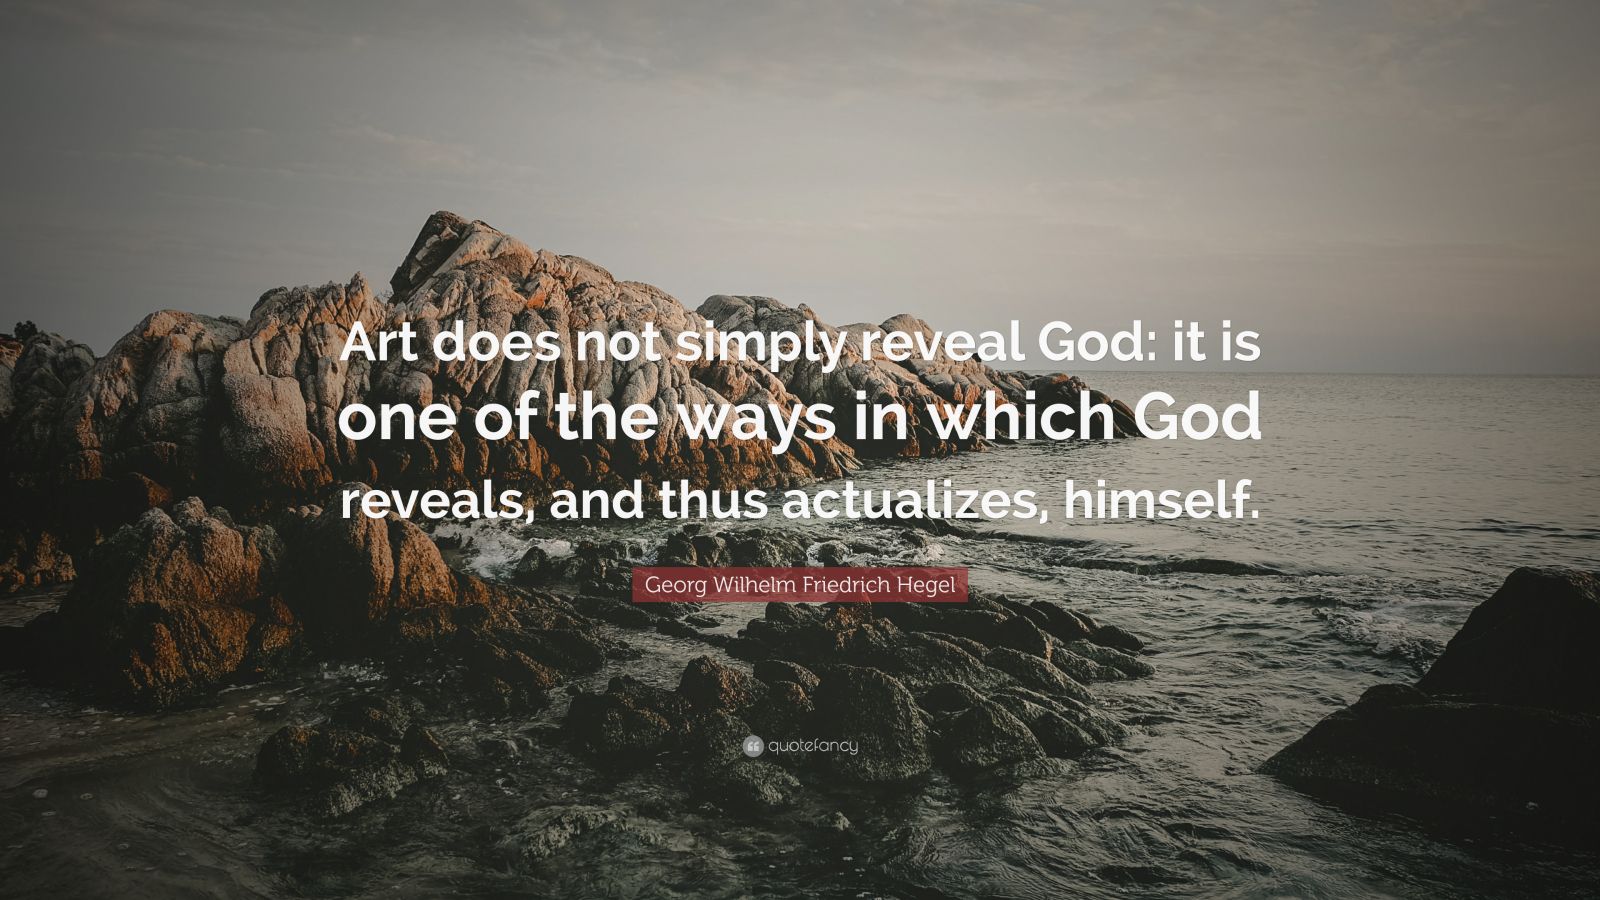 Georg Wilhelm Friedrich Hegel Quote: “Art does not simply reveal God ...